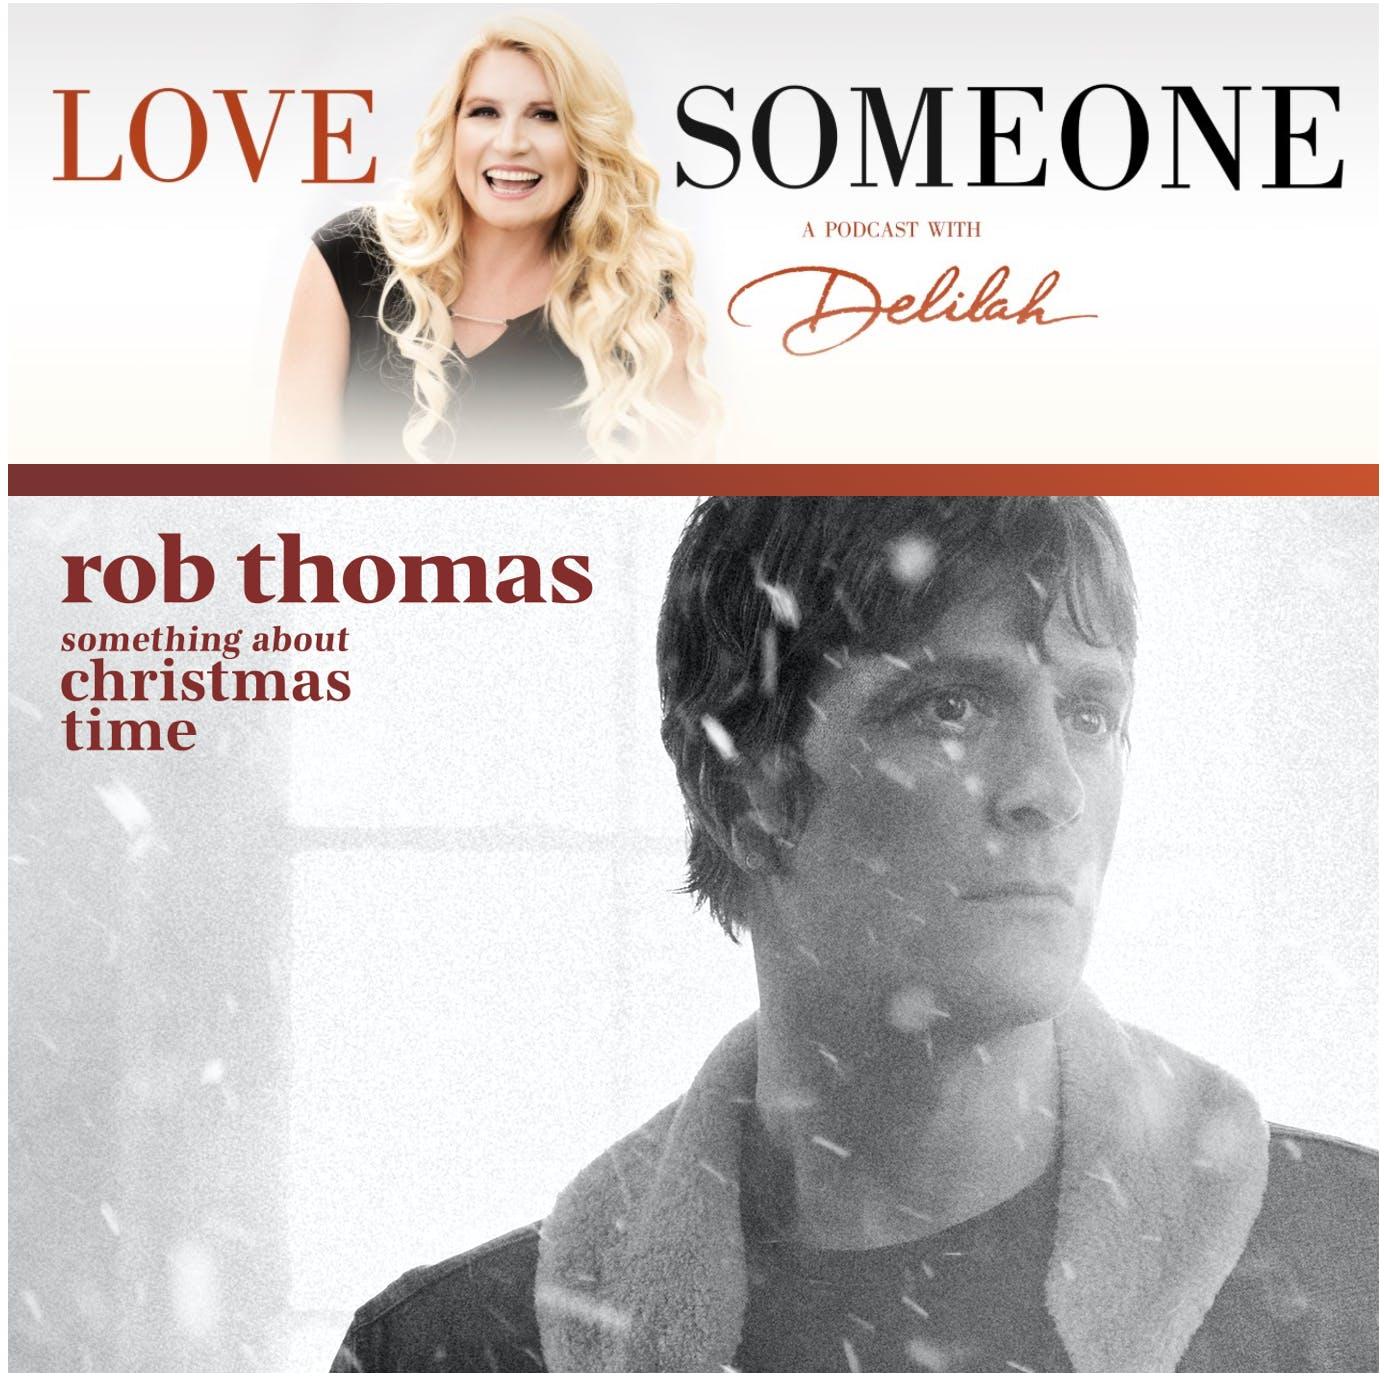 ROB THOMAS: "something about christmas time"